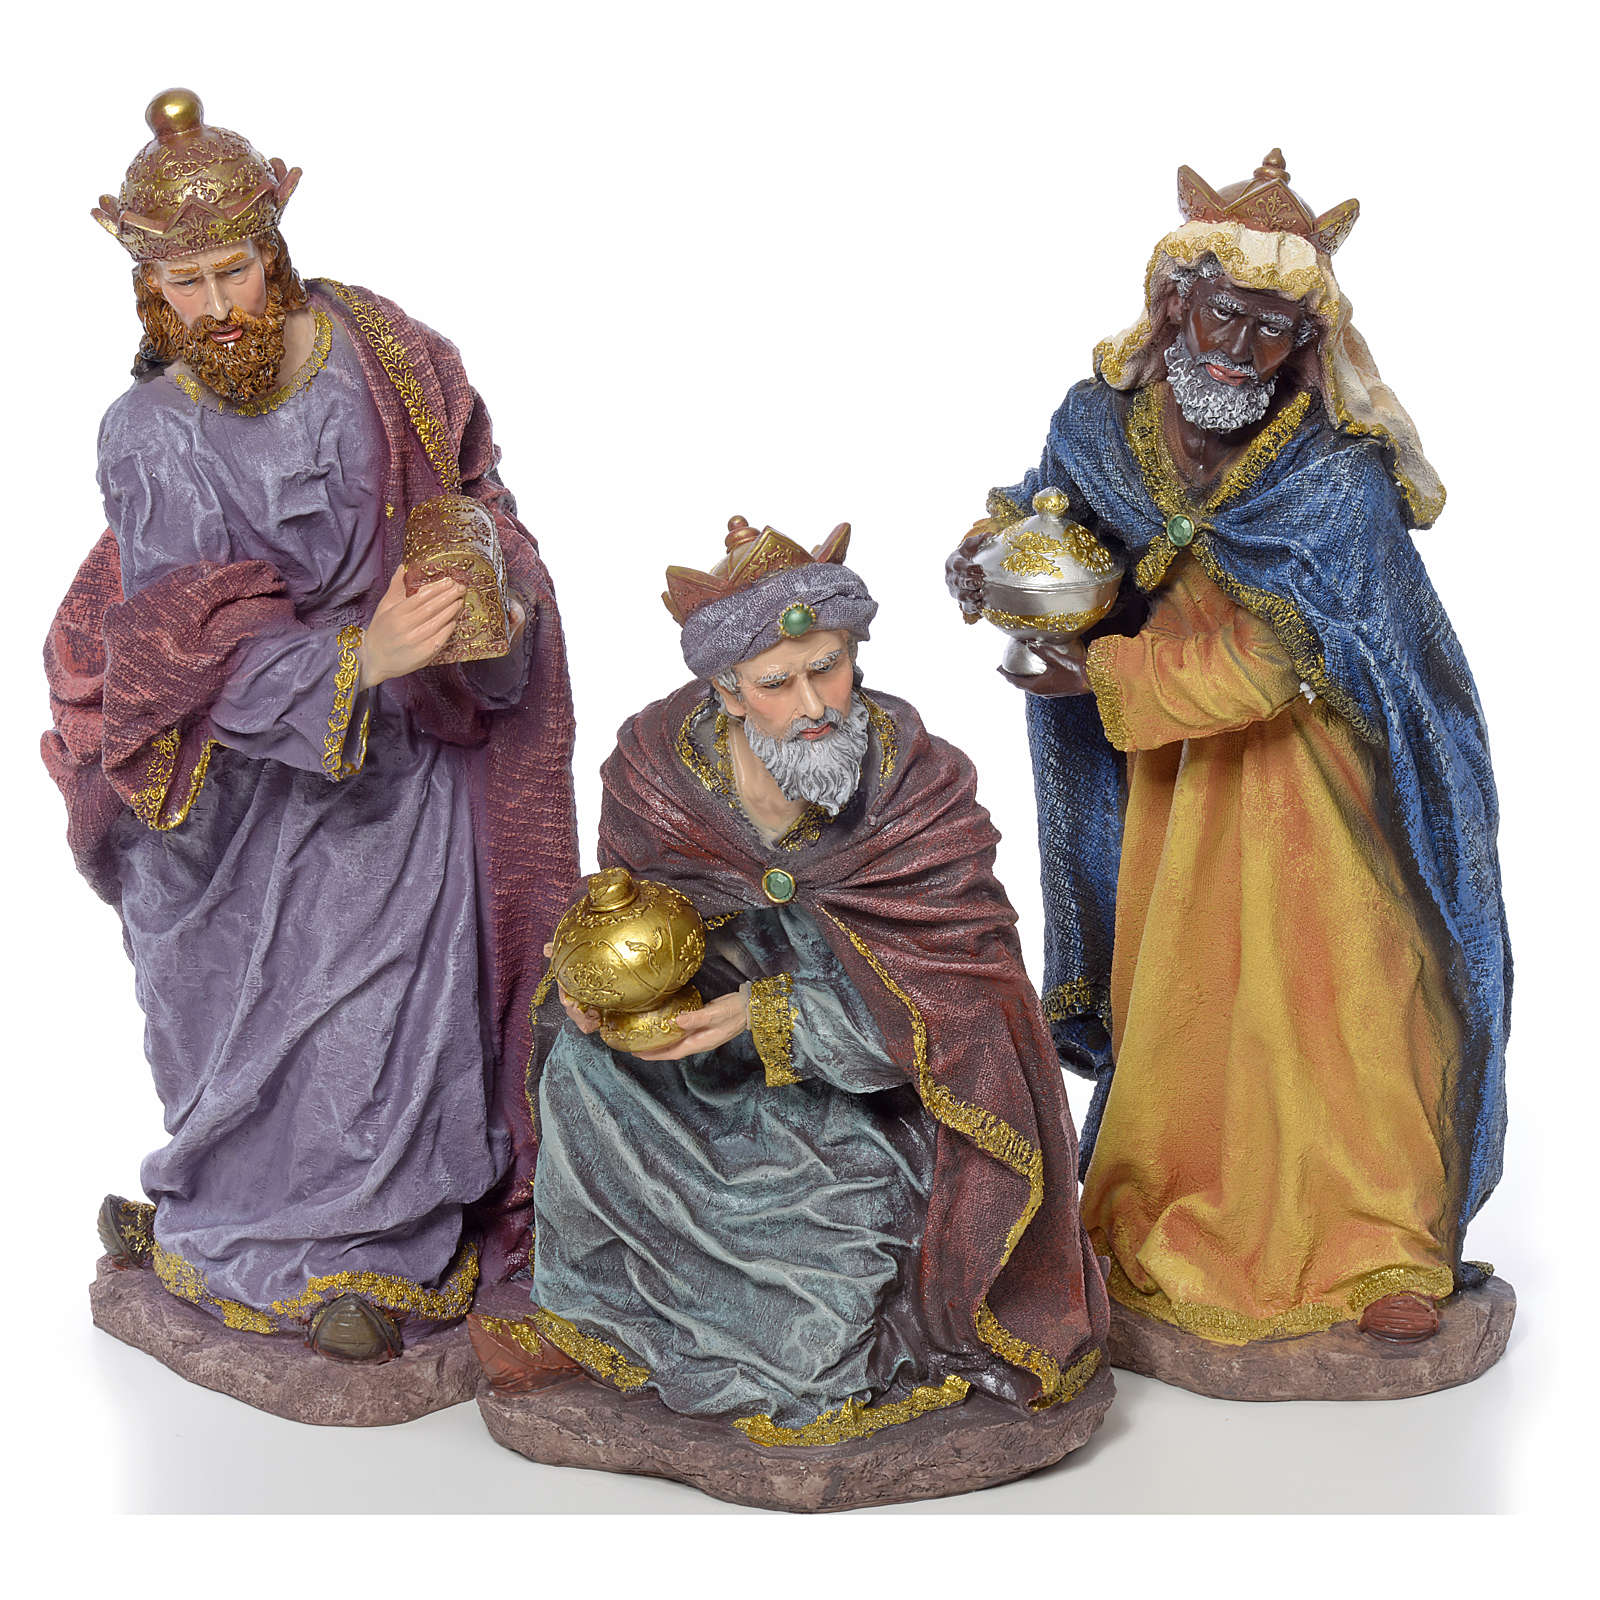 Nativity scene in resin, 12 figurines 63cm | online sales on HOLYART.co.uk